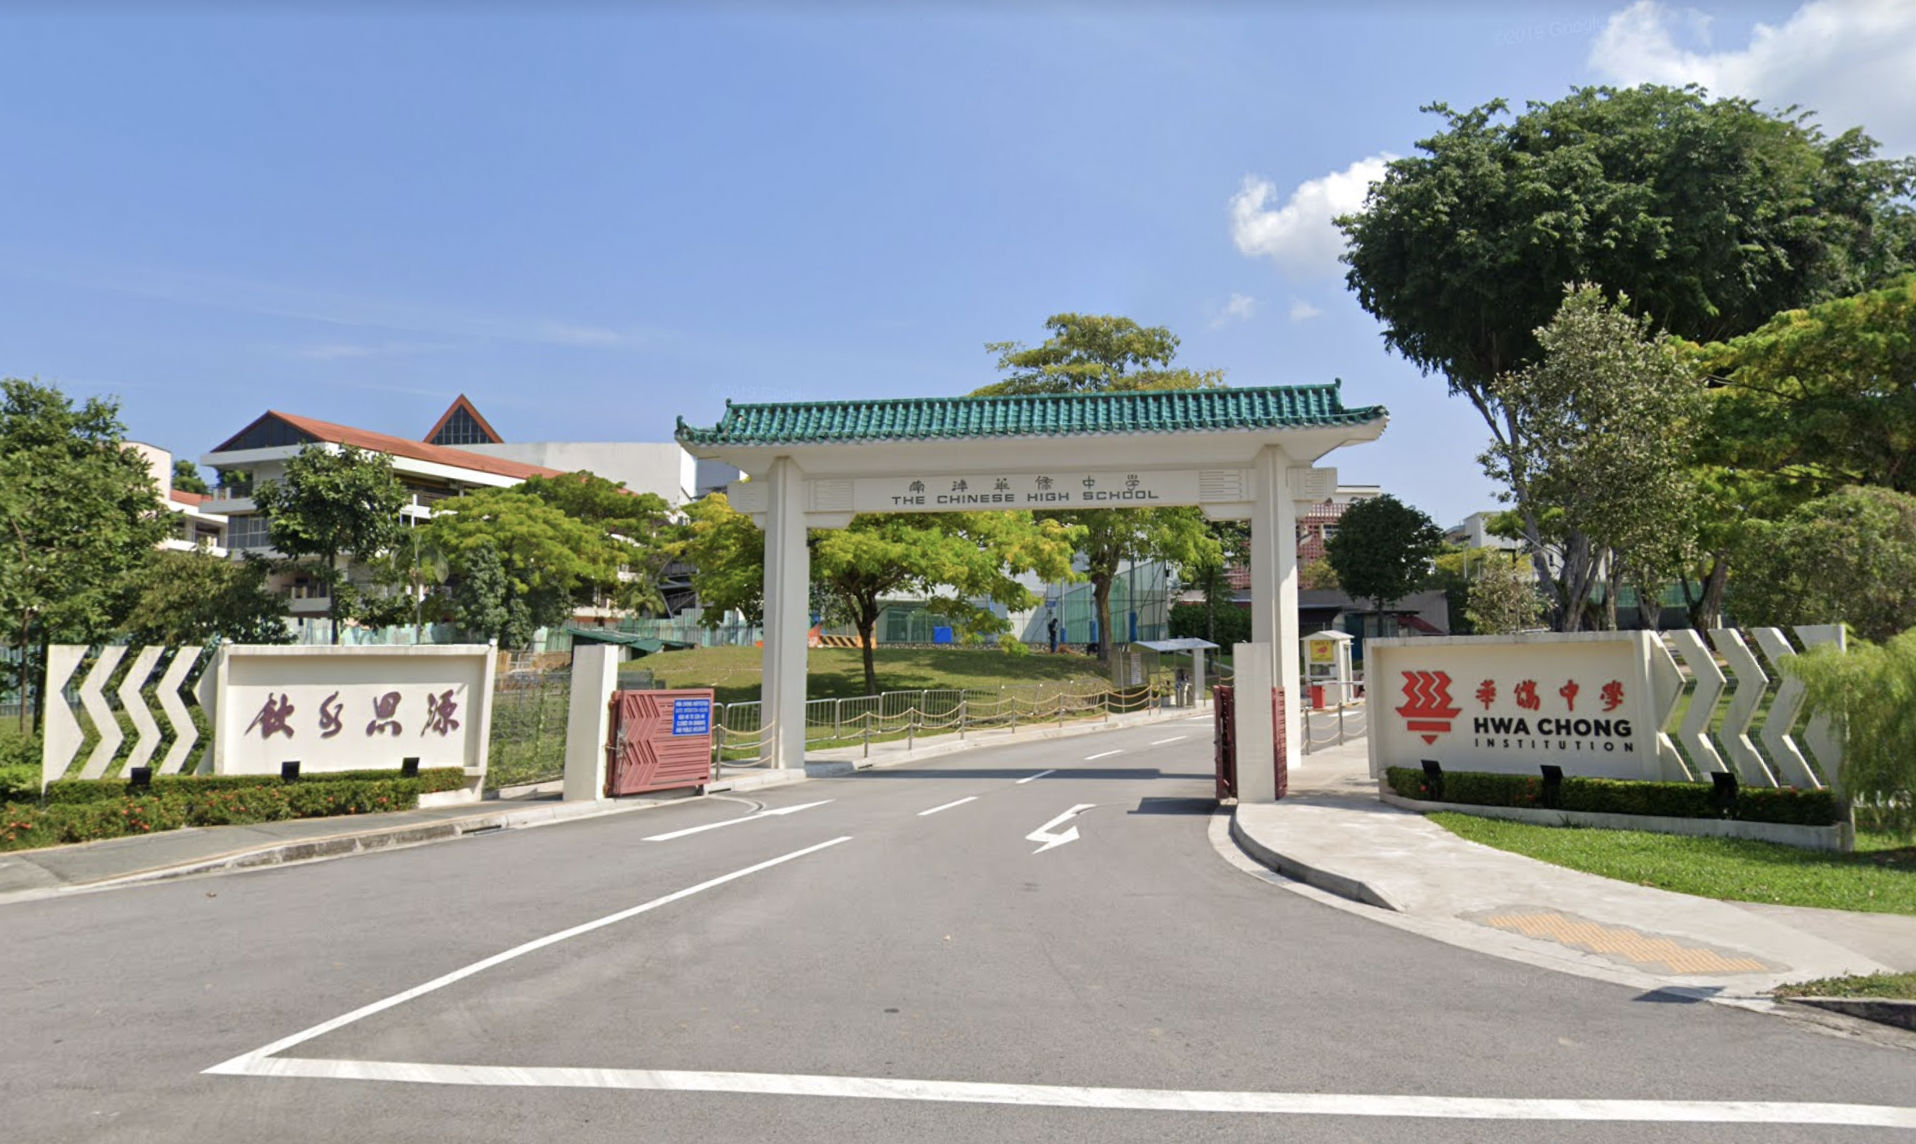 Entrance of Hwa Chong Institution. Image: Google